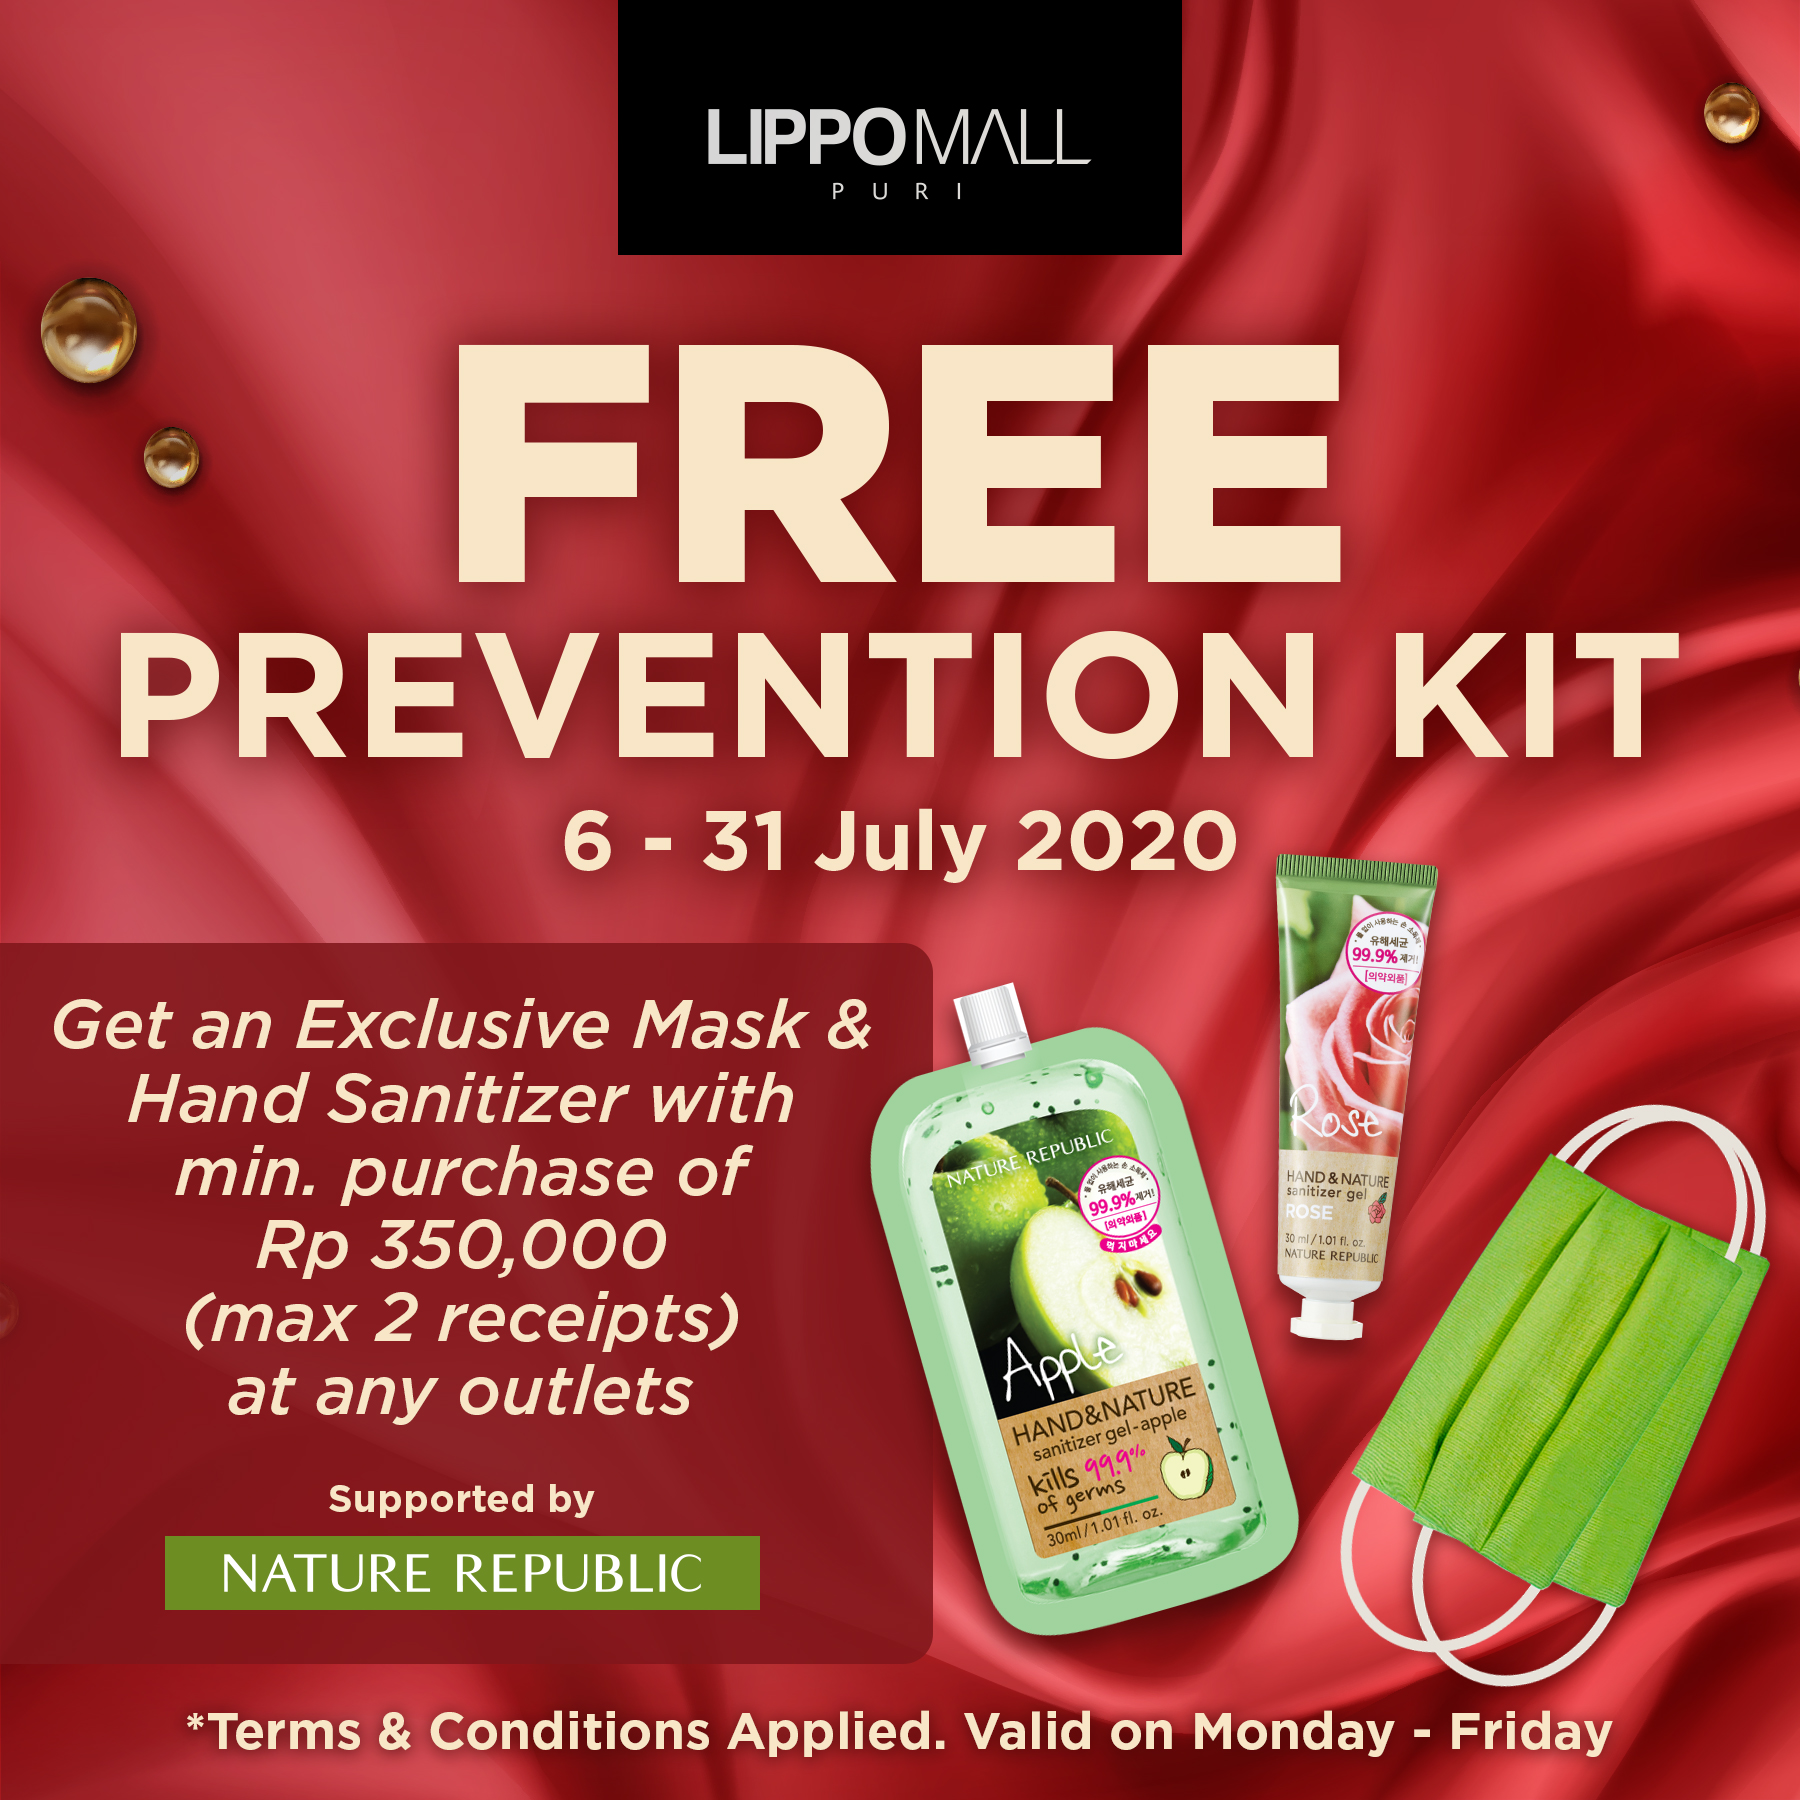 Free Prevention Kit Promo in lippo mall puri st. moritz